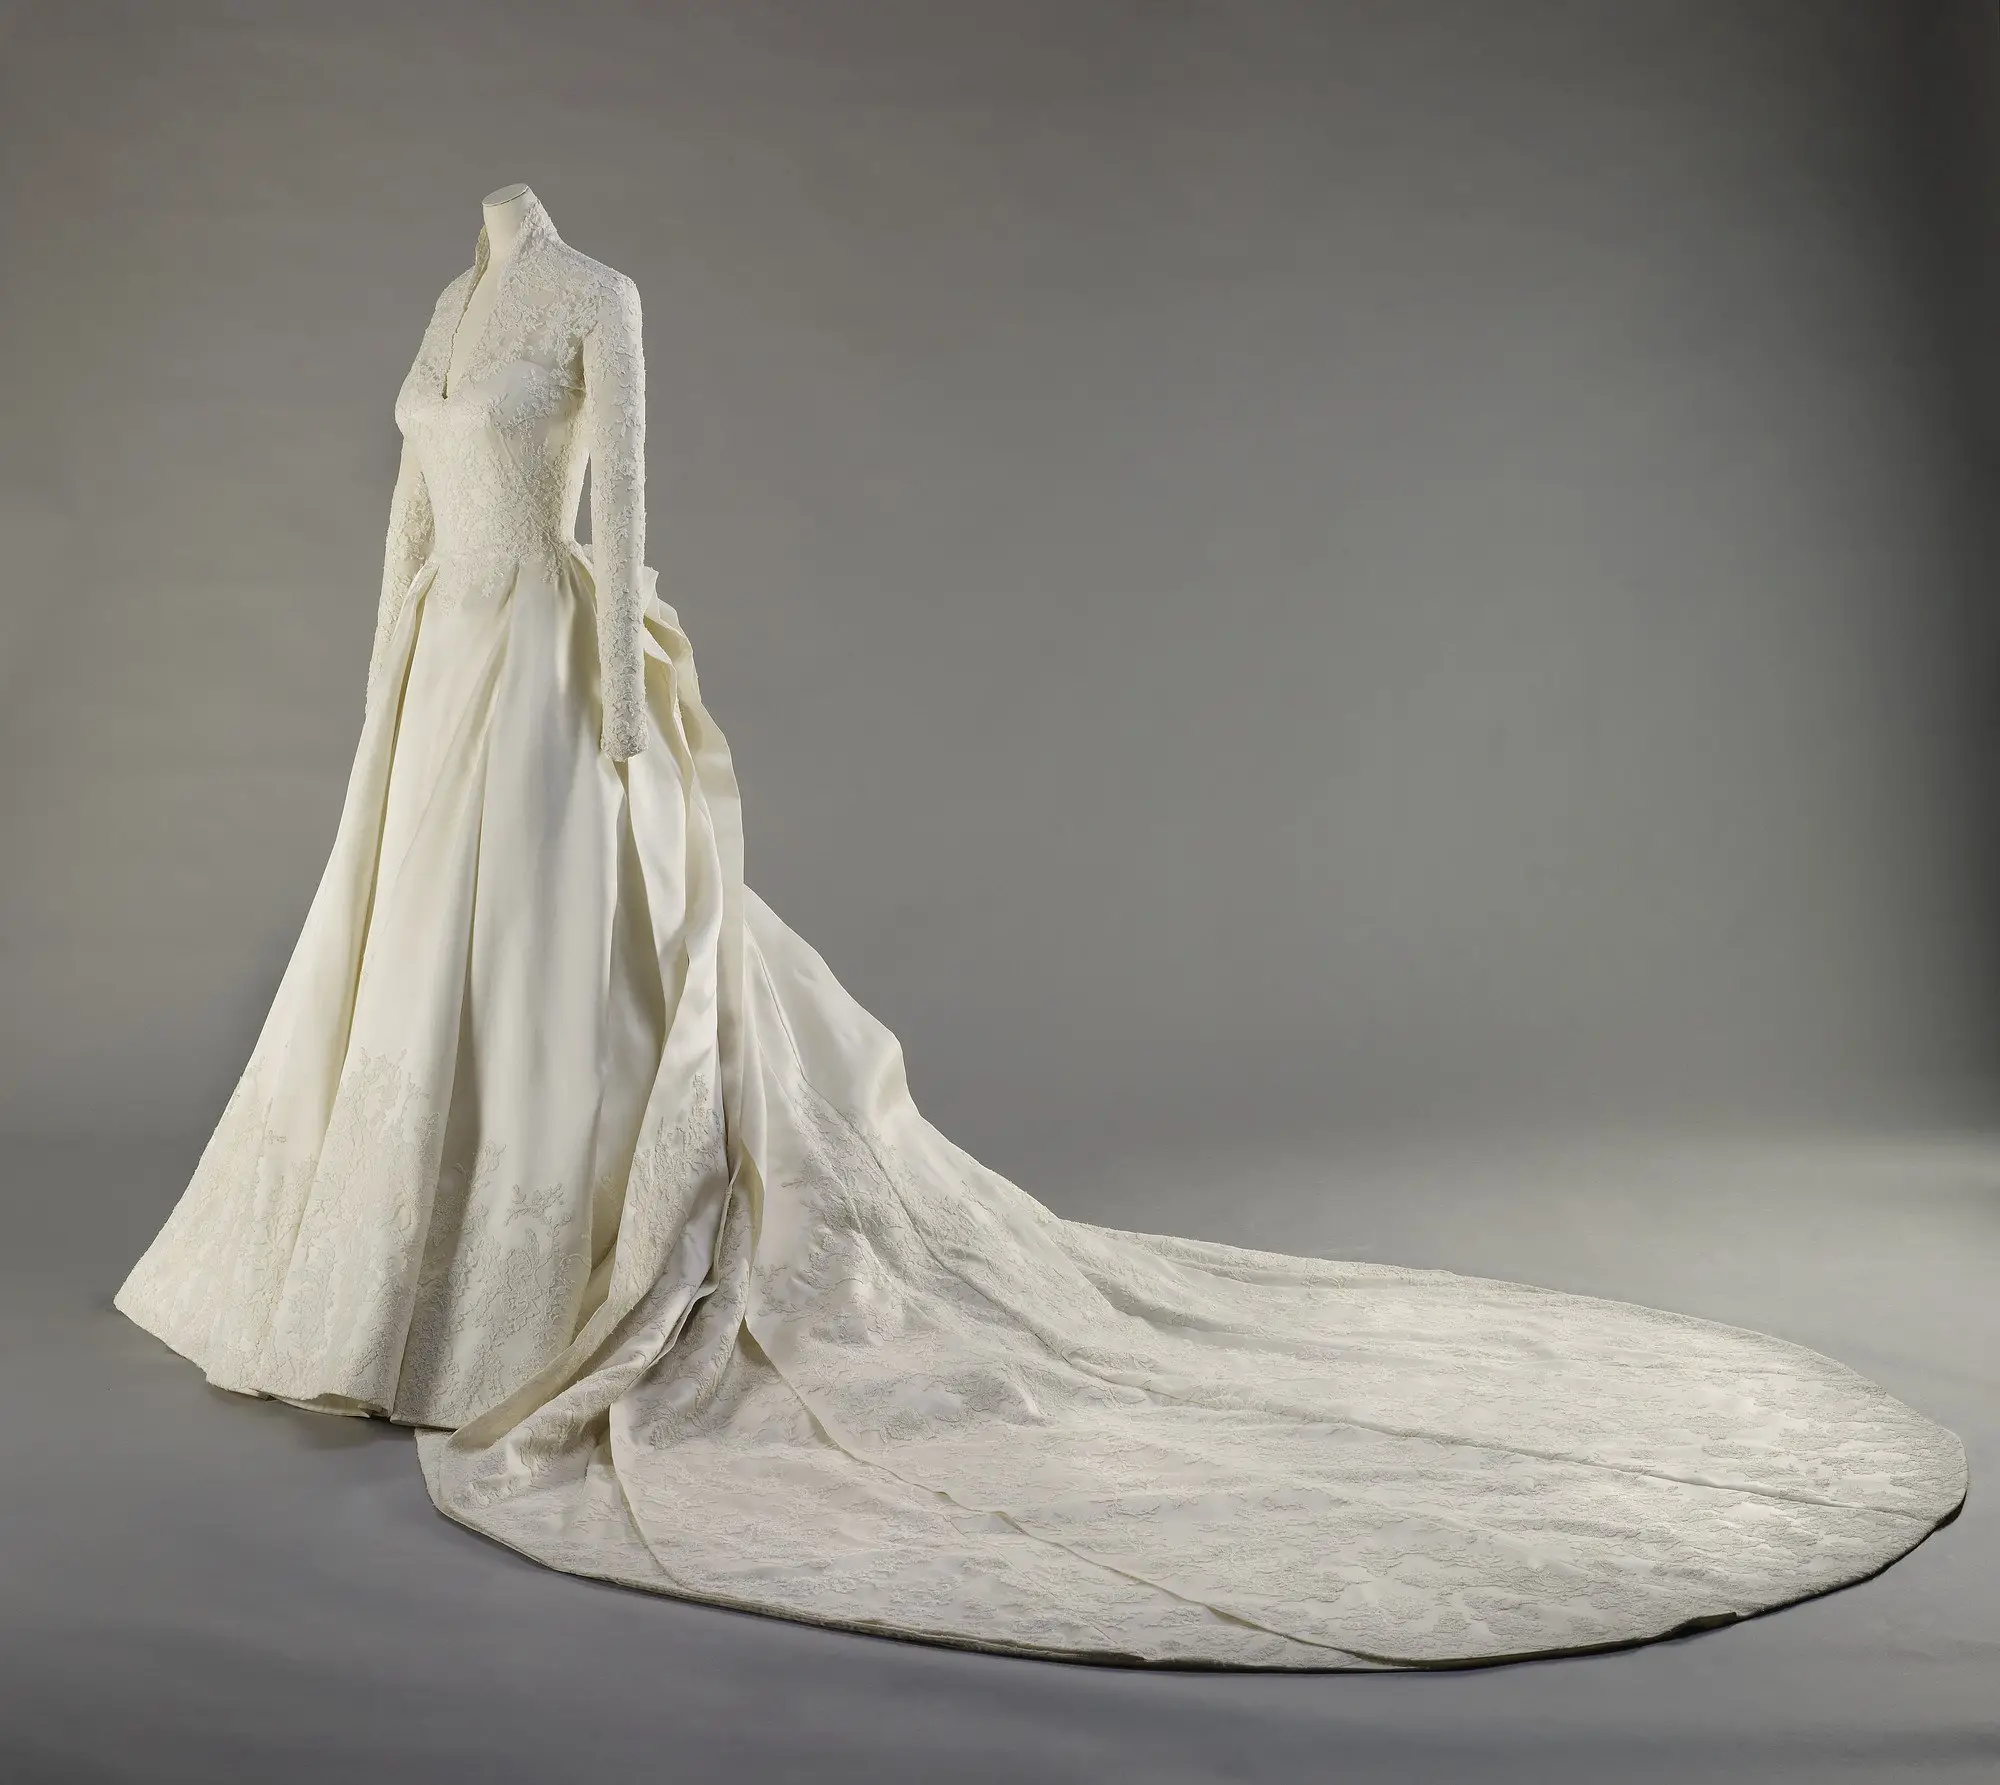 The Duchess of Cambridge's Wedding gown